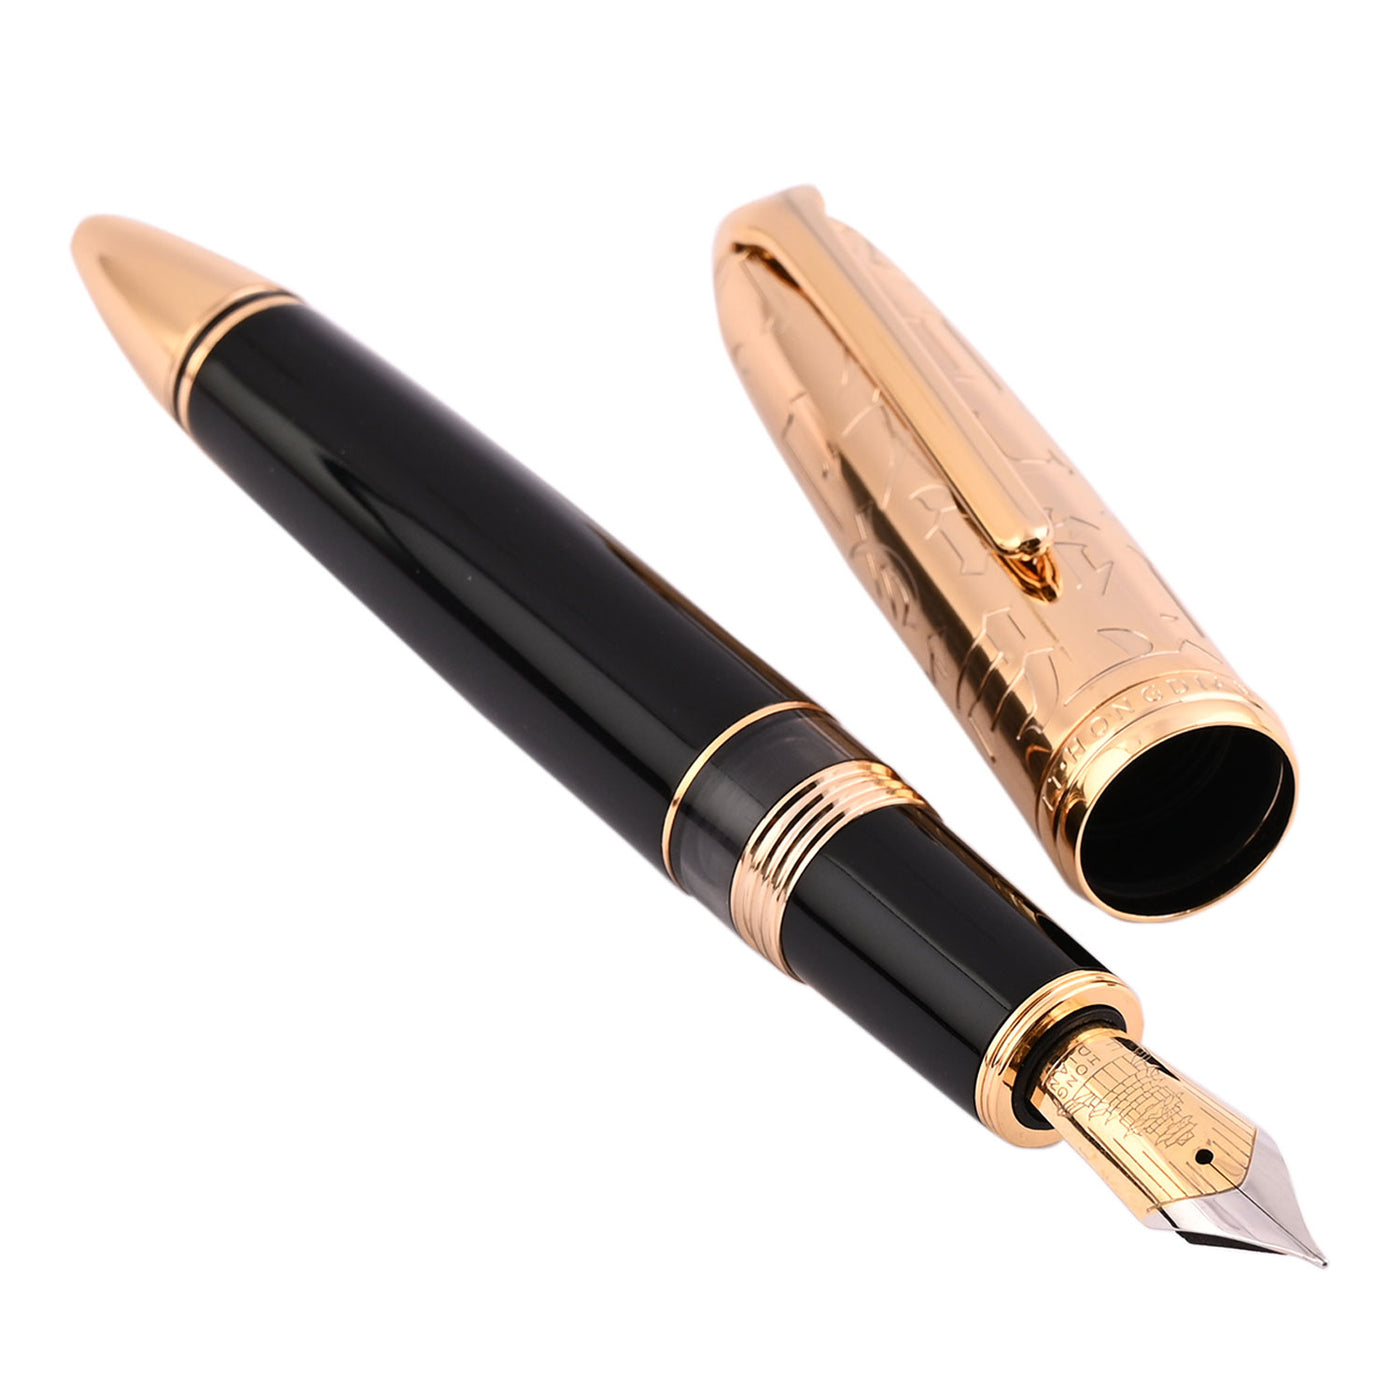 Hongdian N6 Fountain Pen - Black Gold 2